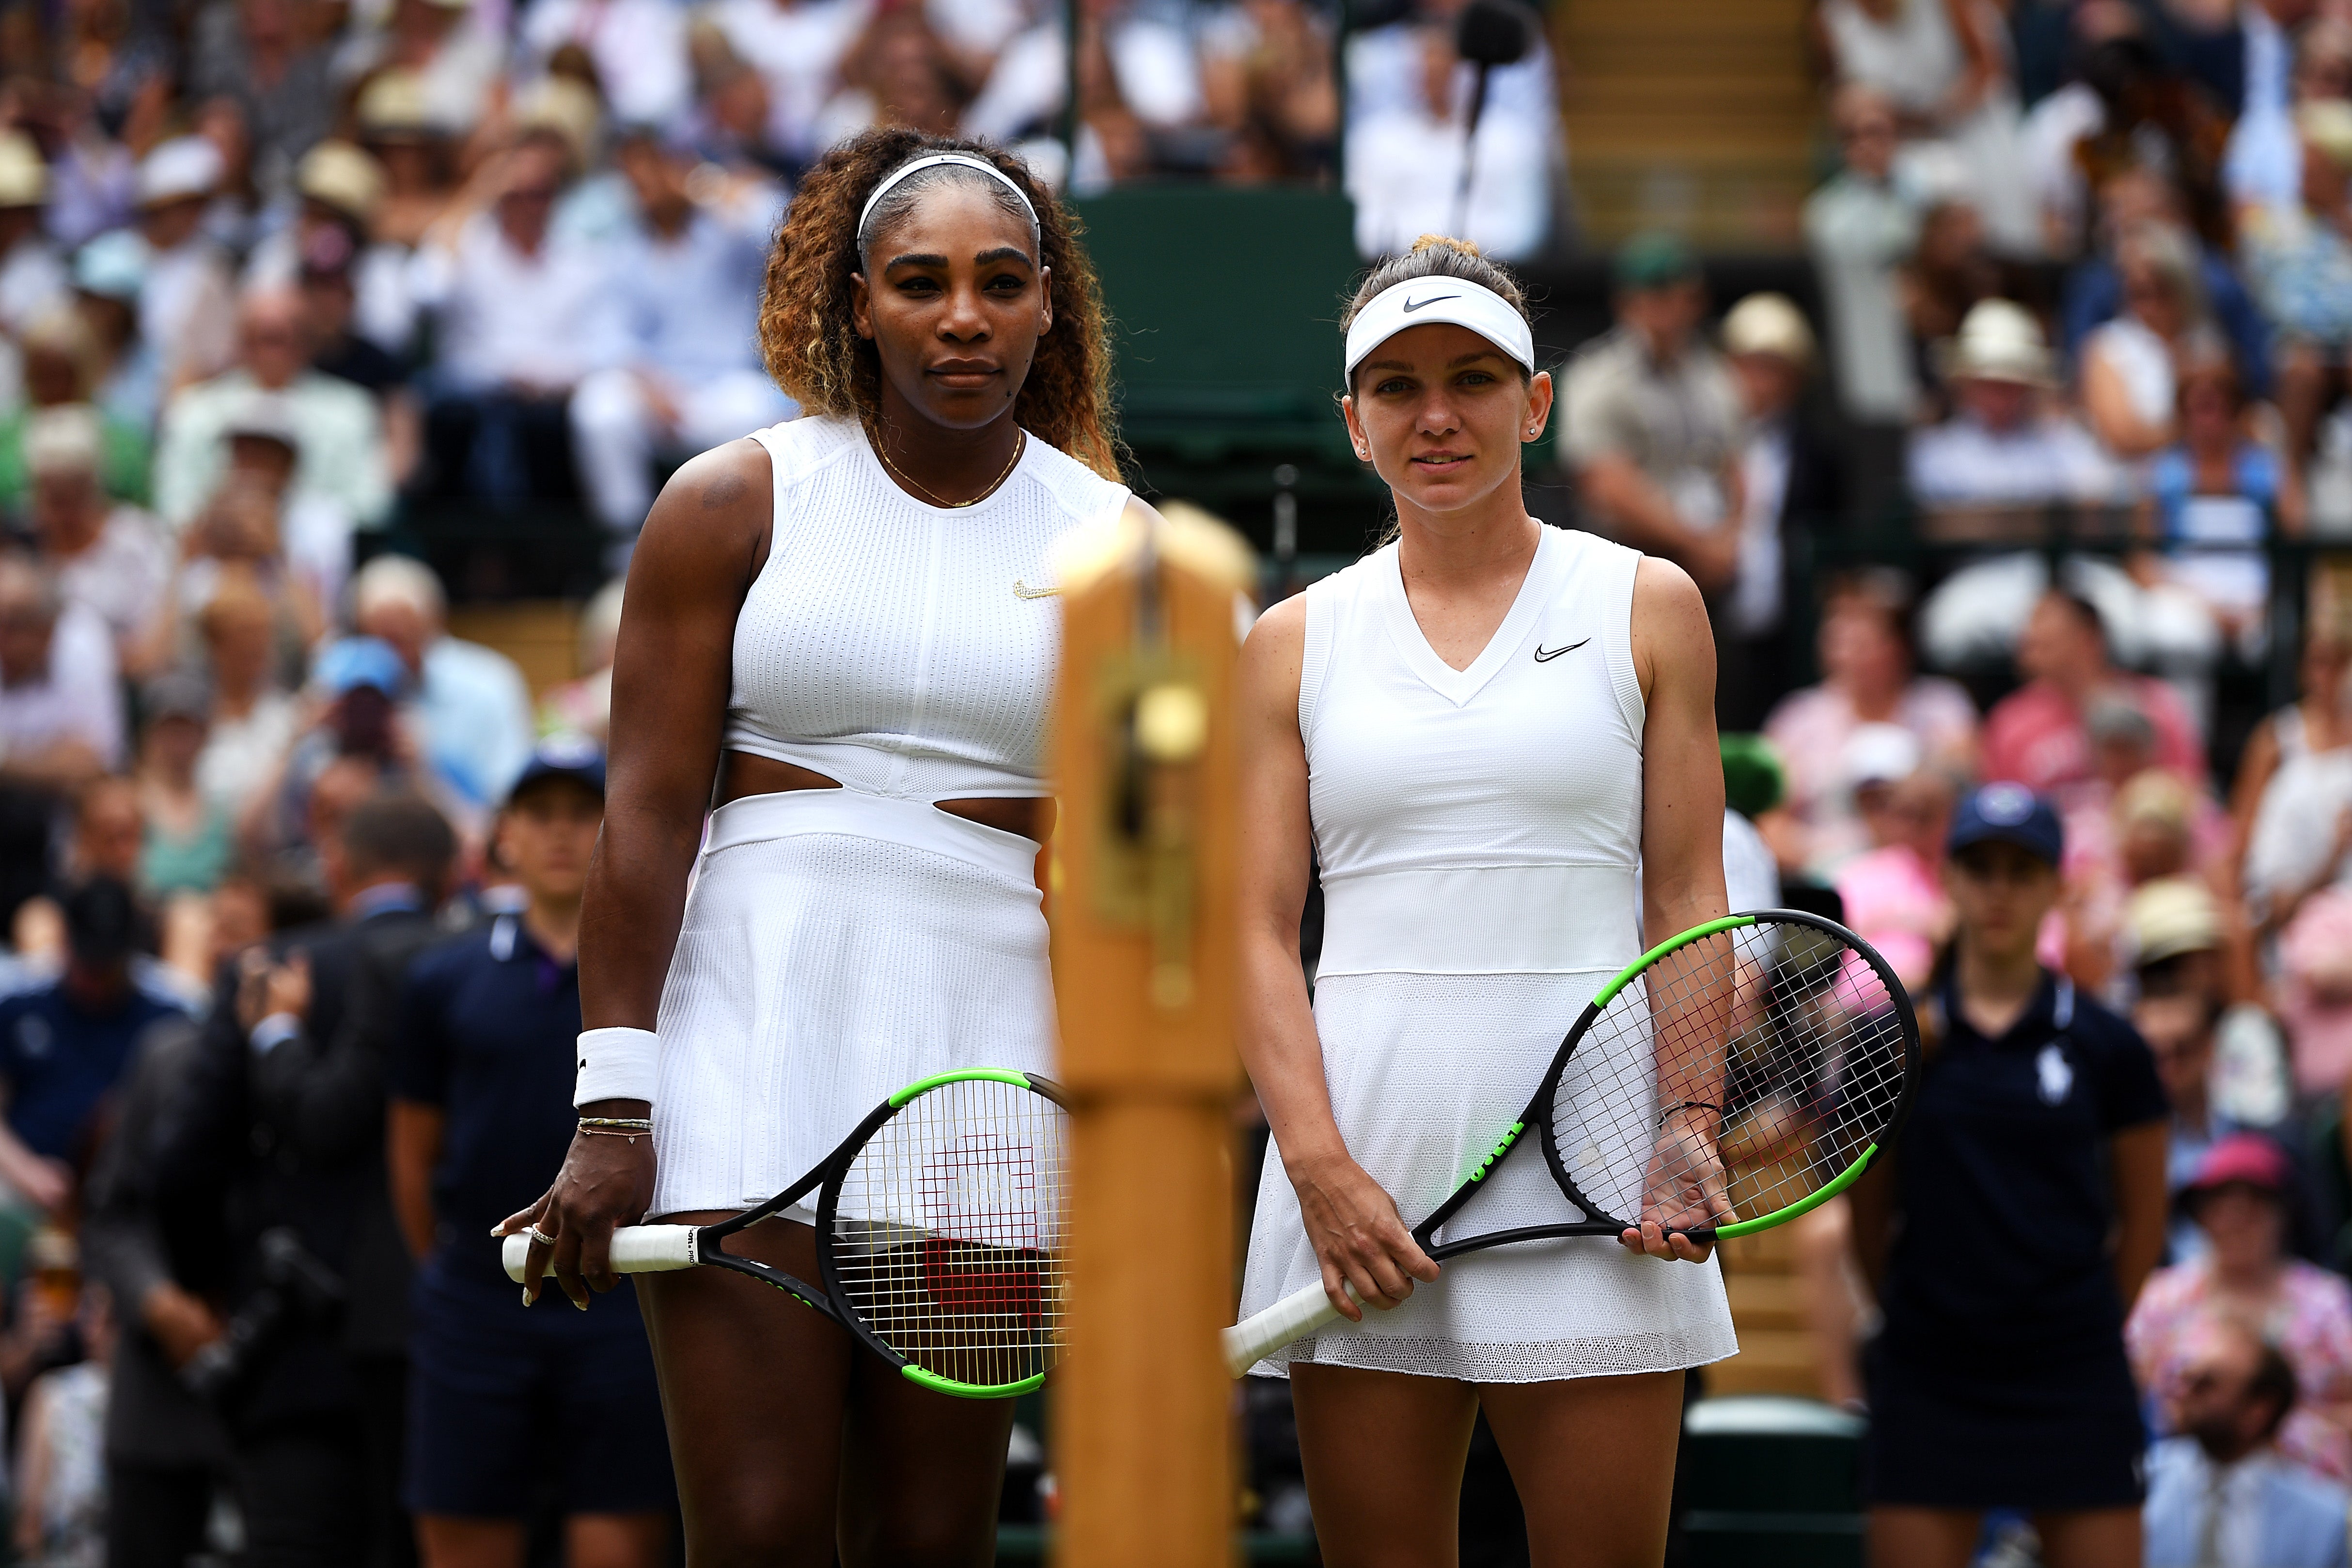 Serena Williams and Simona Halep pose before the 2019 Wimbledon final